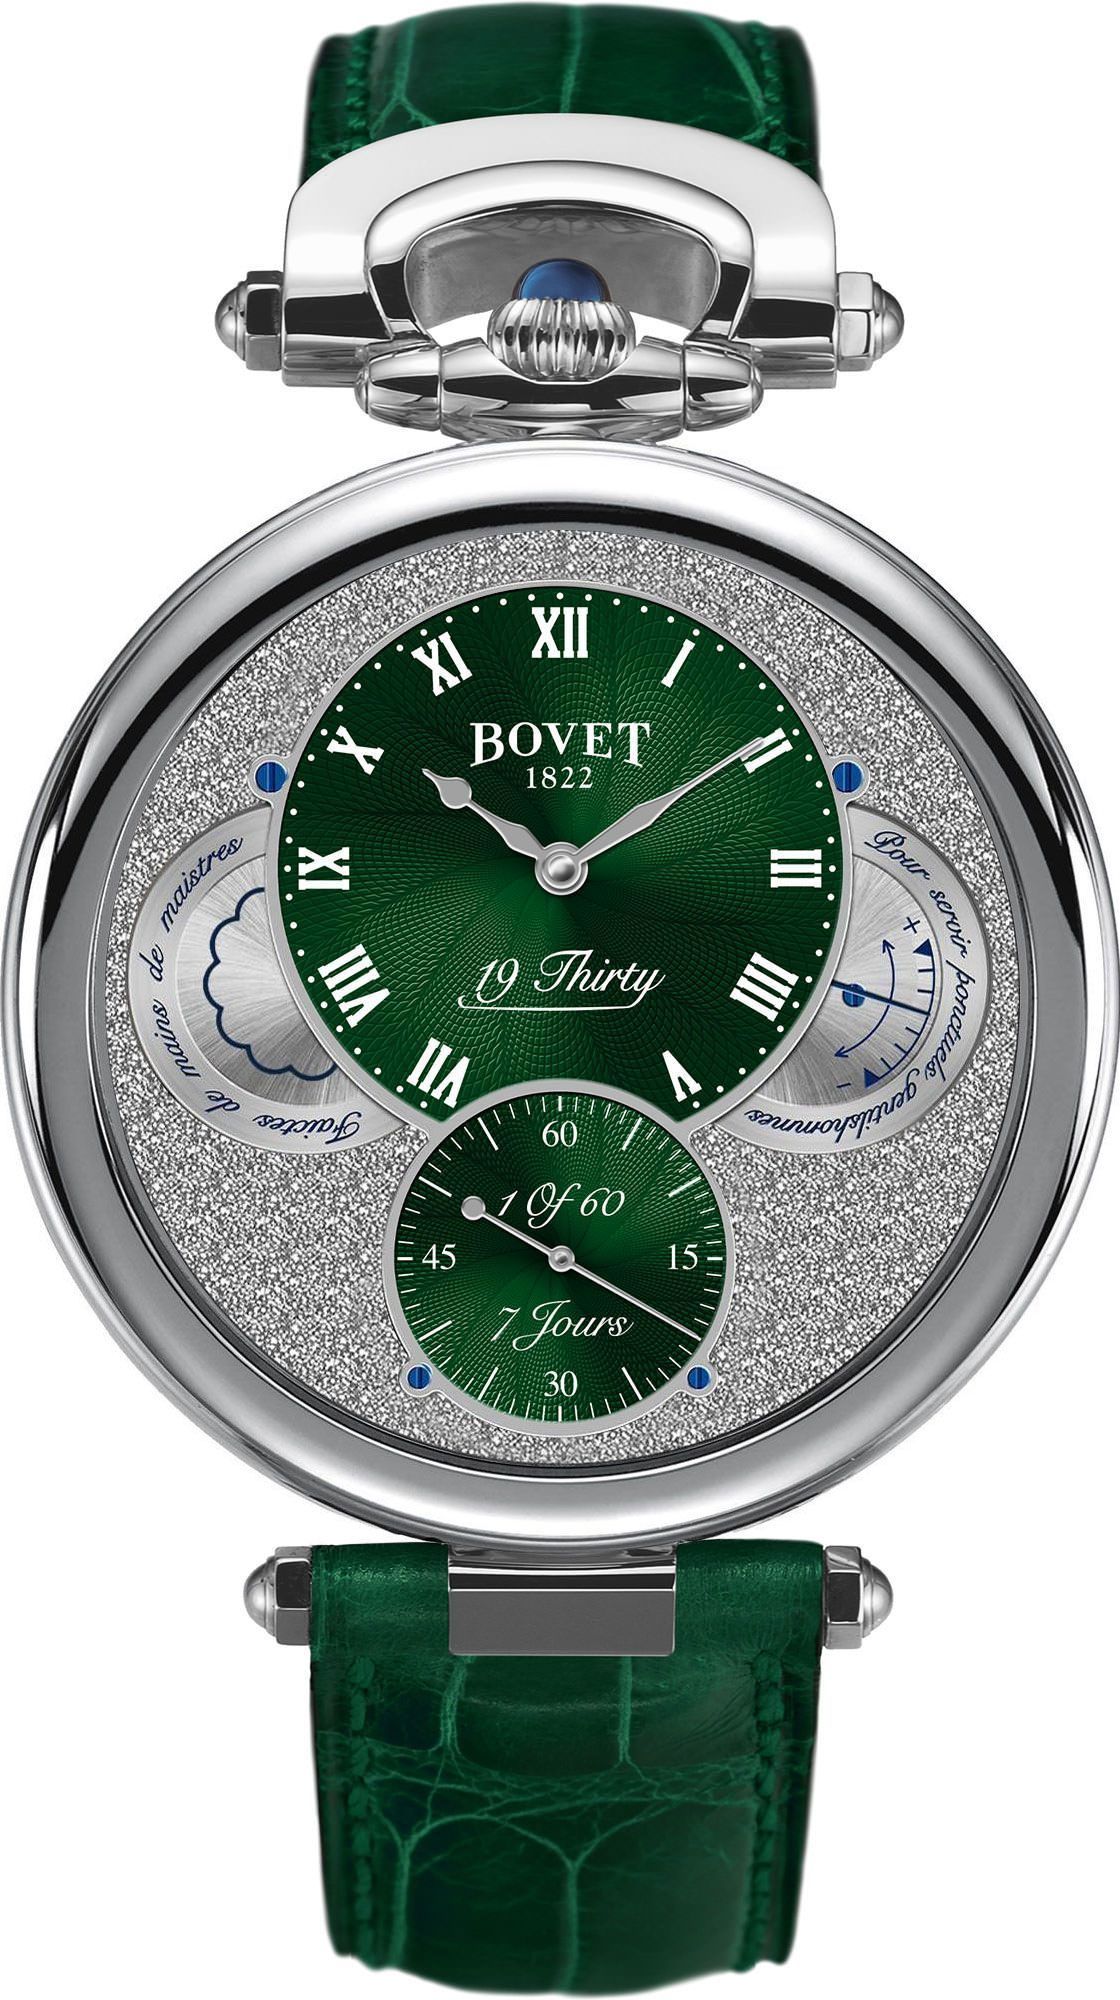 Bovet Fleurier 19Thirty Great Guilloché Green Dial 42 mm Manual Winding Watch For Men - 1